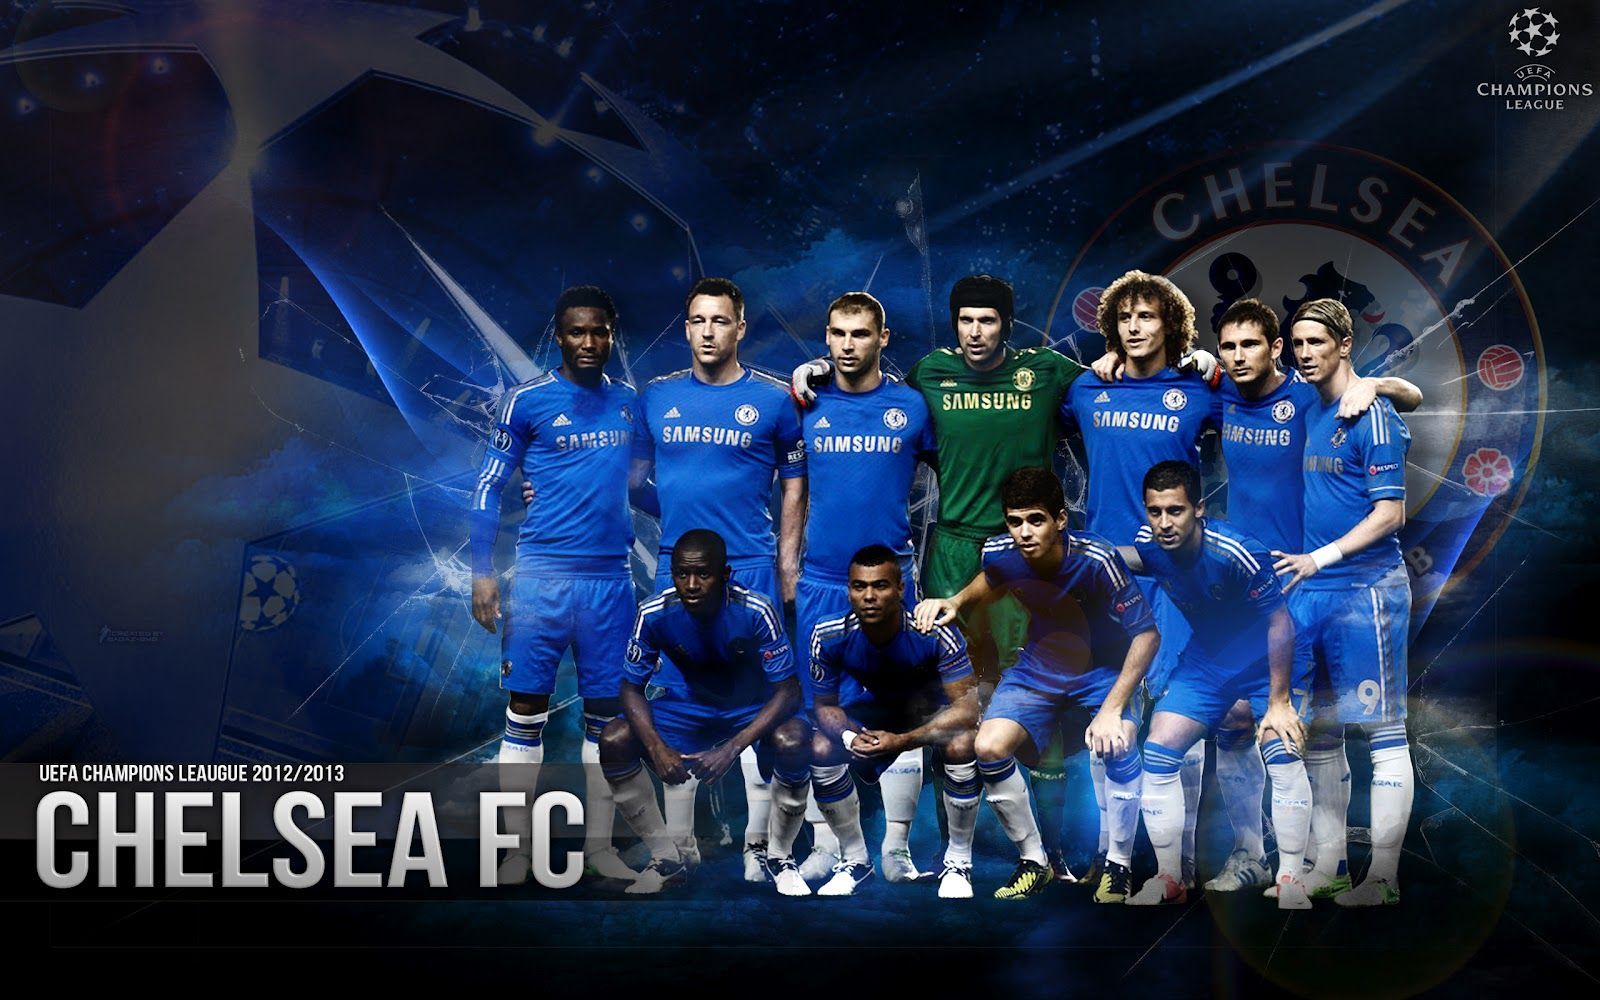 New Chelsea FC Champions League 2012 2013 Full HD Wallpaper ...